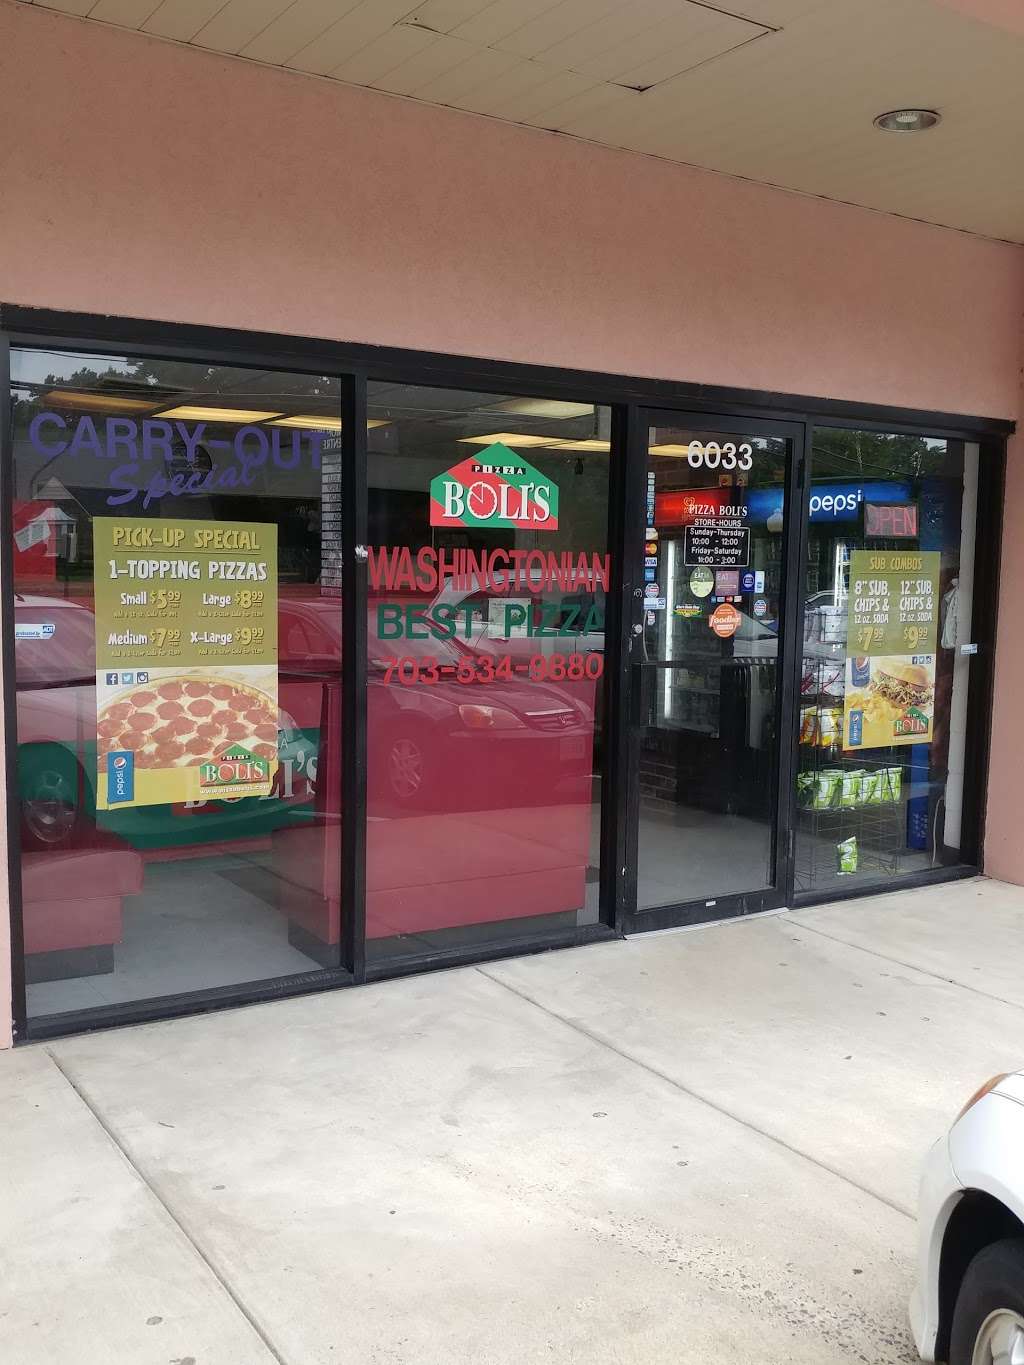 Pizza Bolis | 6033 Wilson Blvd, Arlington, VA 22205 | Phone: (703) 534-9880